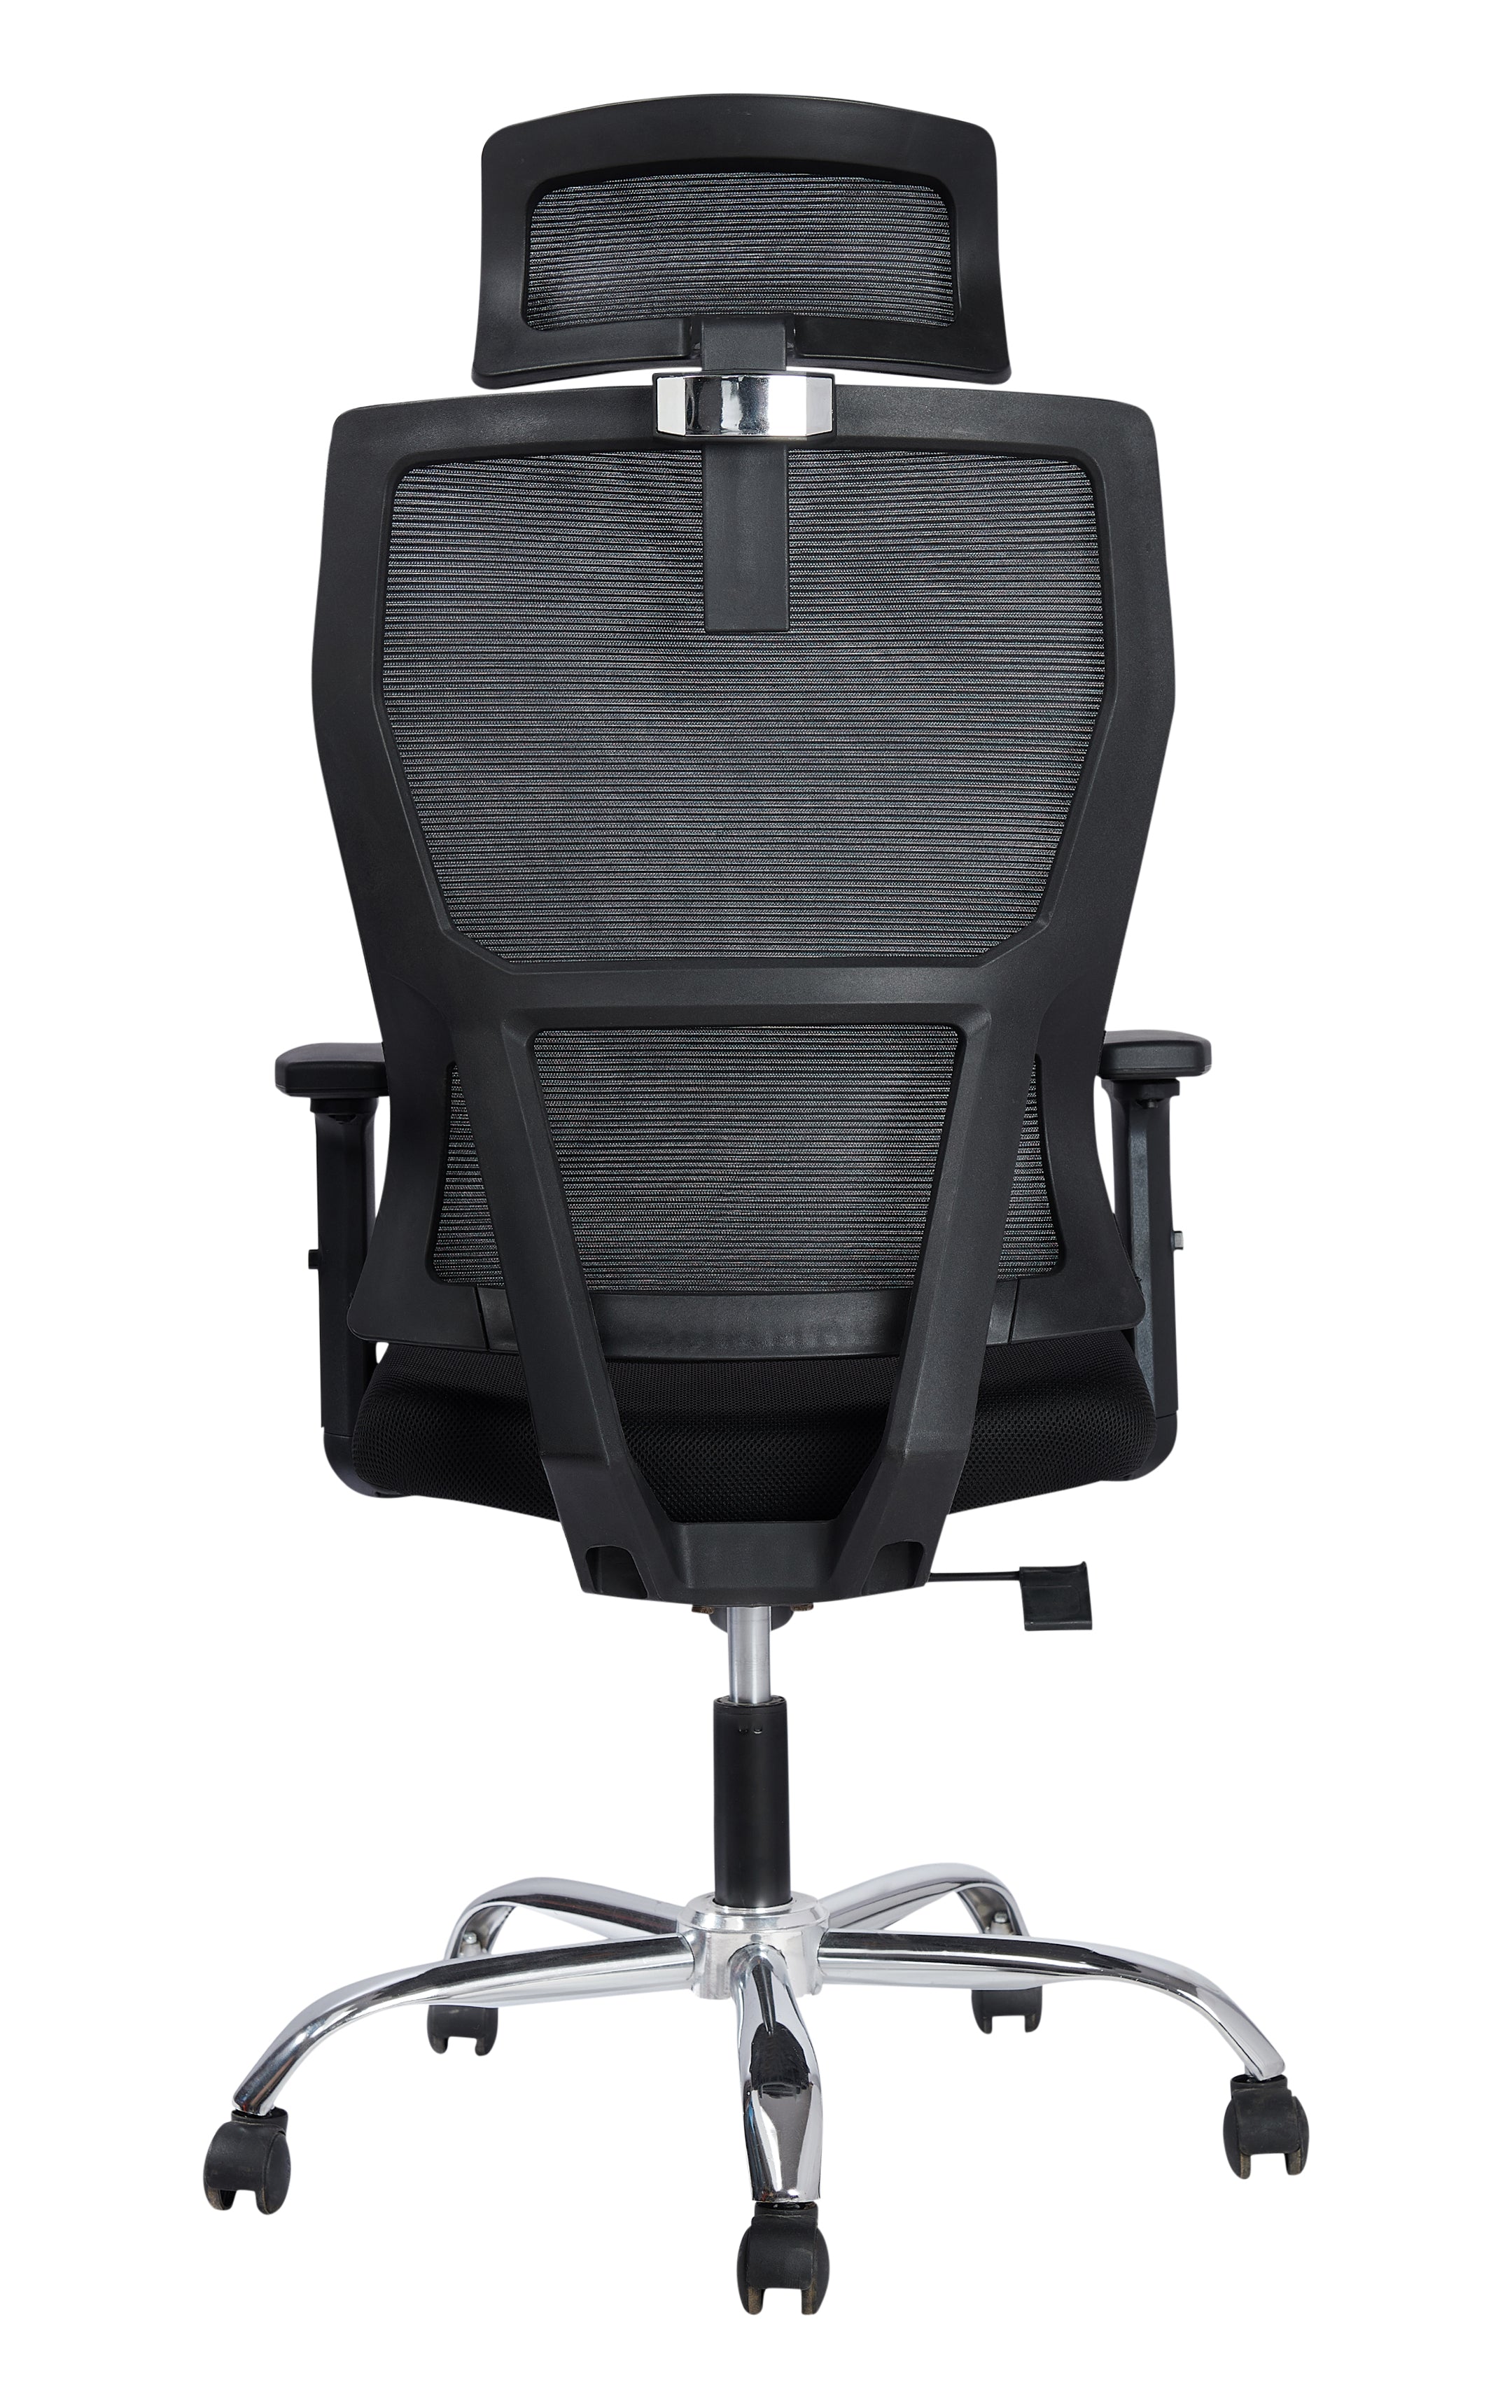 Agustin High Back Ergonomic Office Chair With Cushion Seat, 2D Armrest And Chrome Base with Nylon Castors- Black